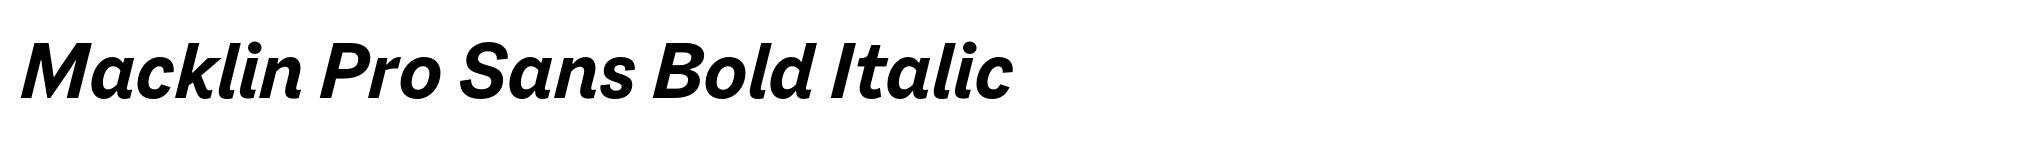 Macklin Pro Sans Bold Italic image